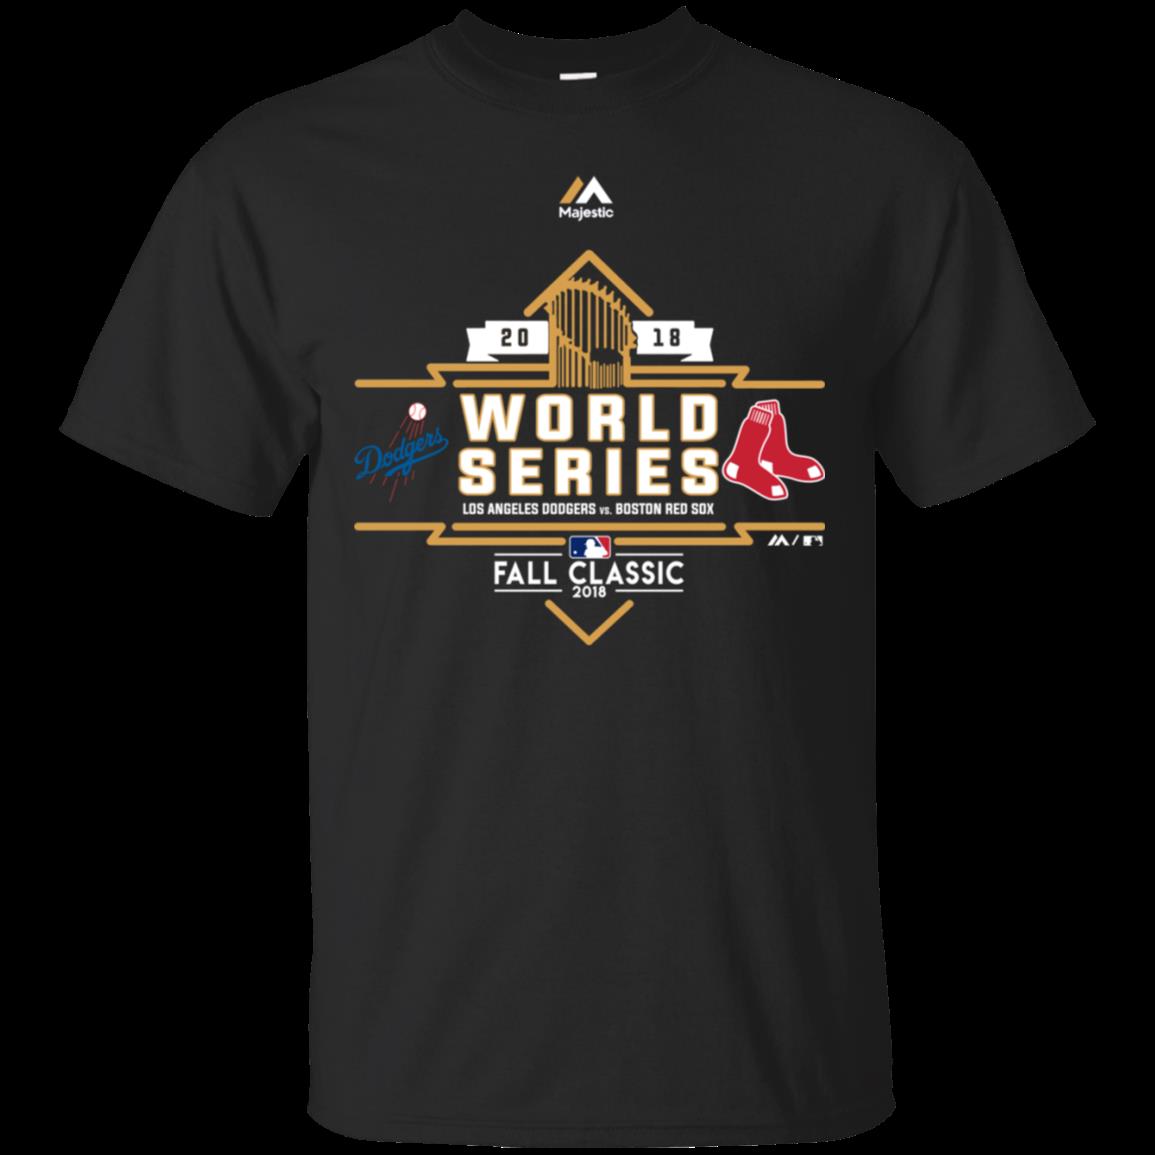 Los Angeles Dodgers Vs Boston Red Sox 2018 World Series Shirt Cotton Shirt